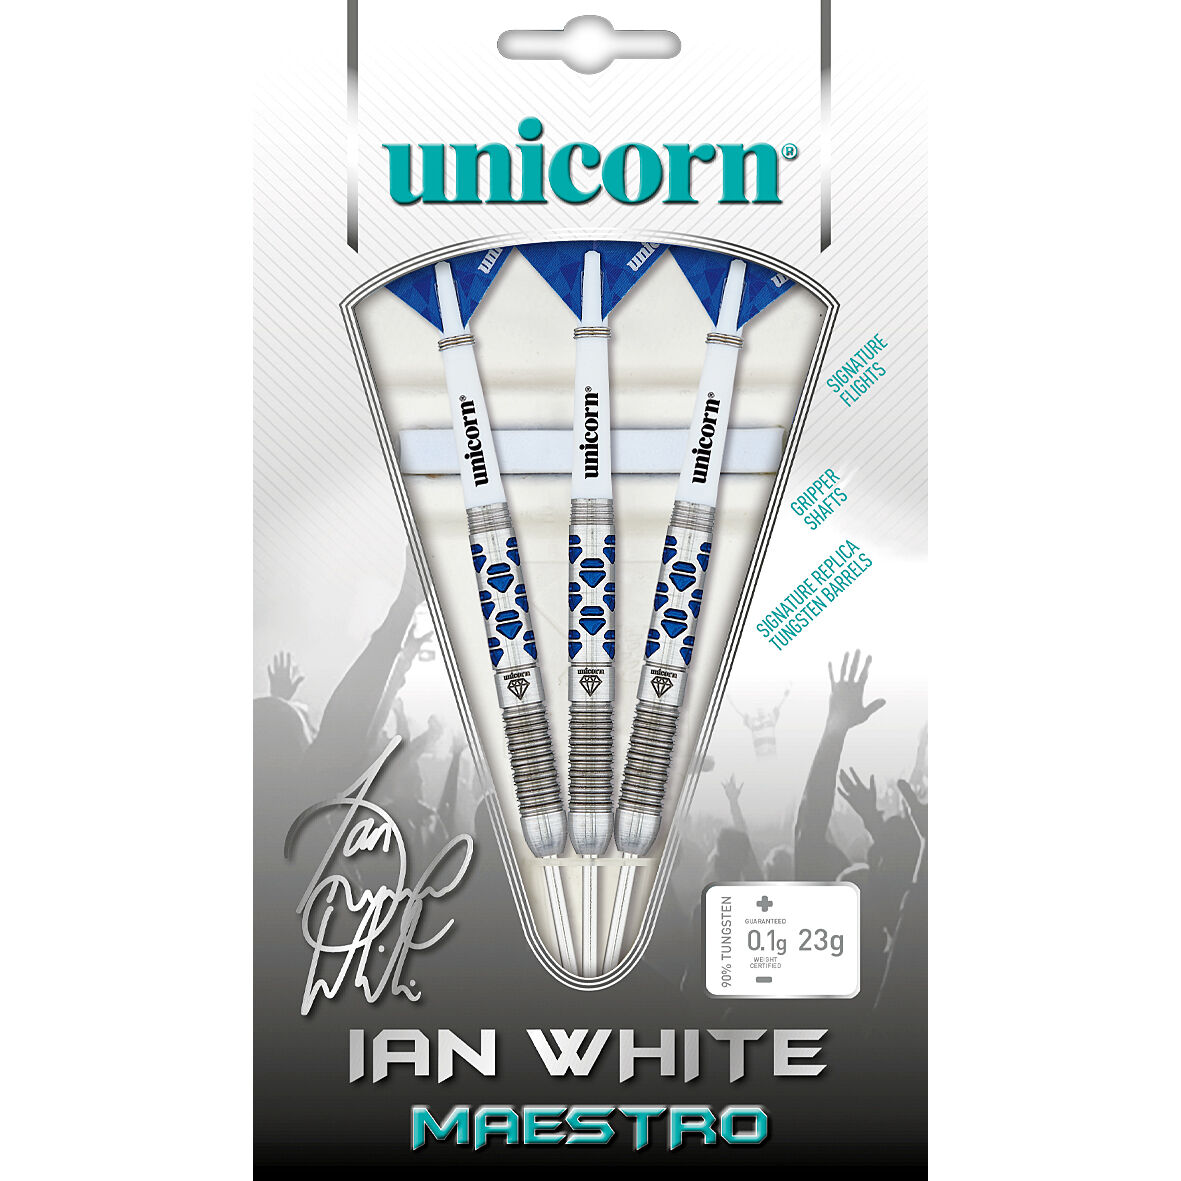 Unicorn - Ian White Phase 2 - Steeldart